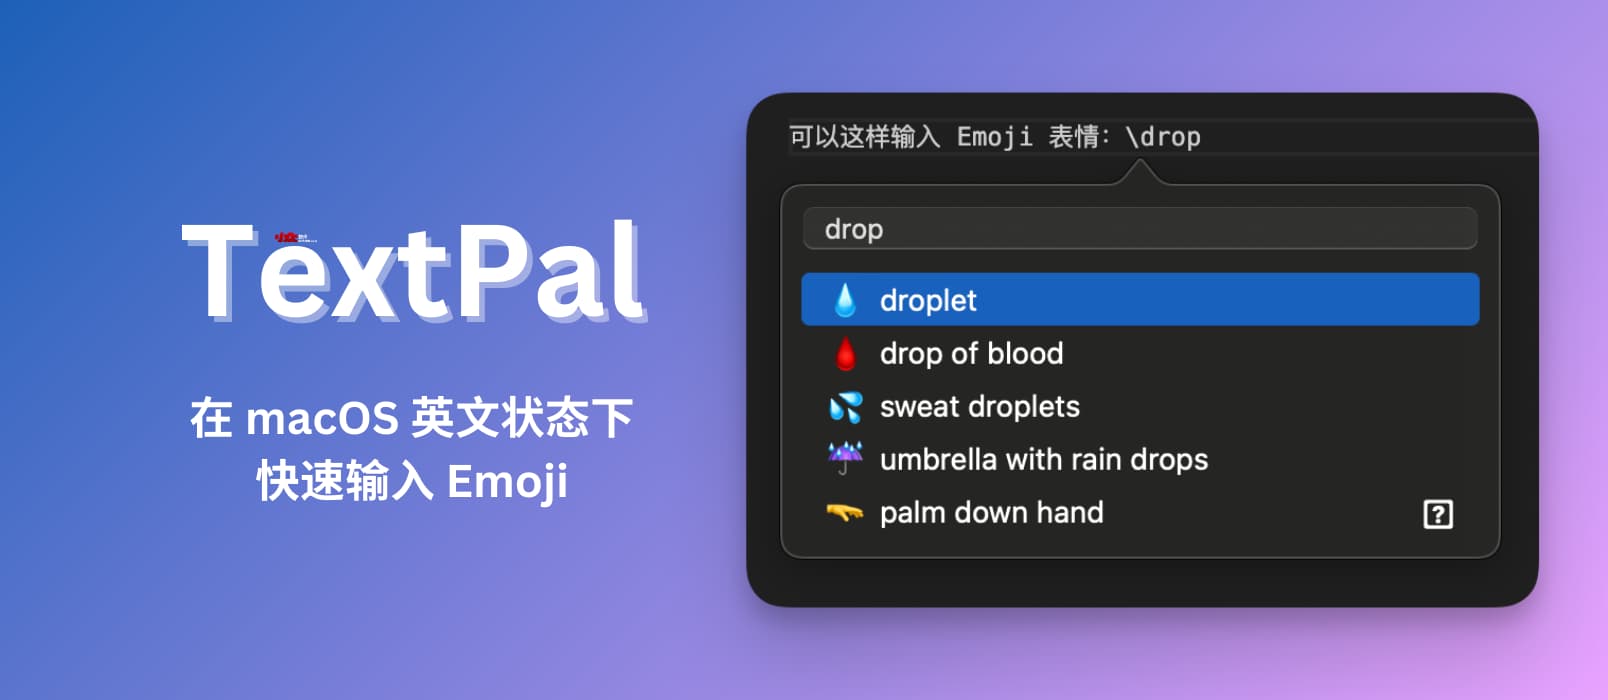 TextPal – 在 macOS 英文输入法状态下，快速输入 Emoji 表情